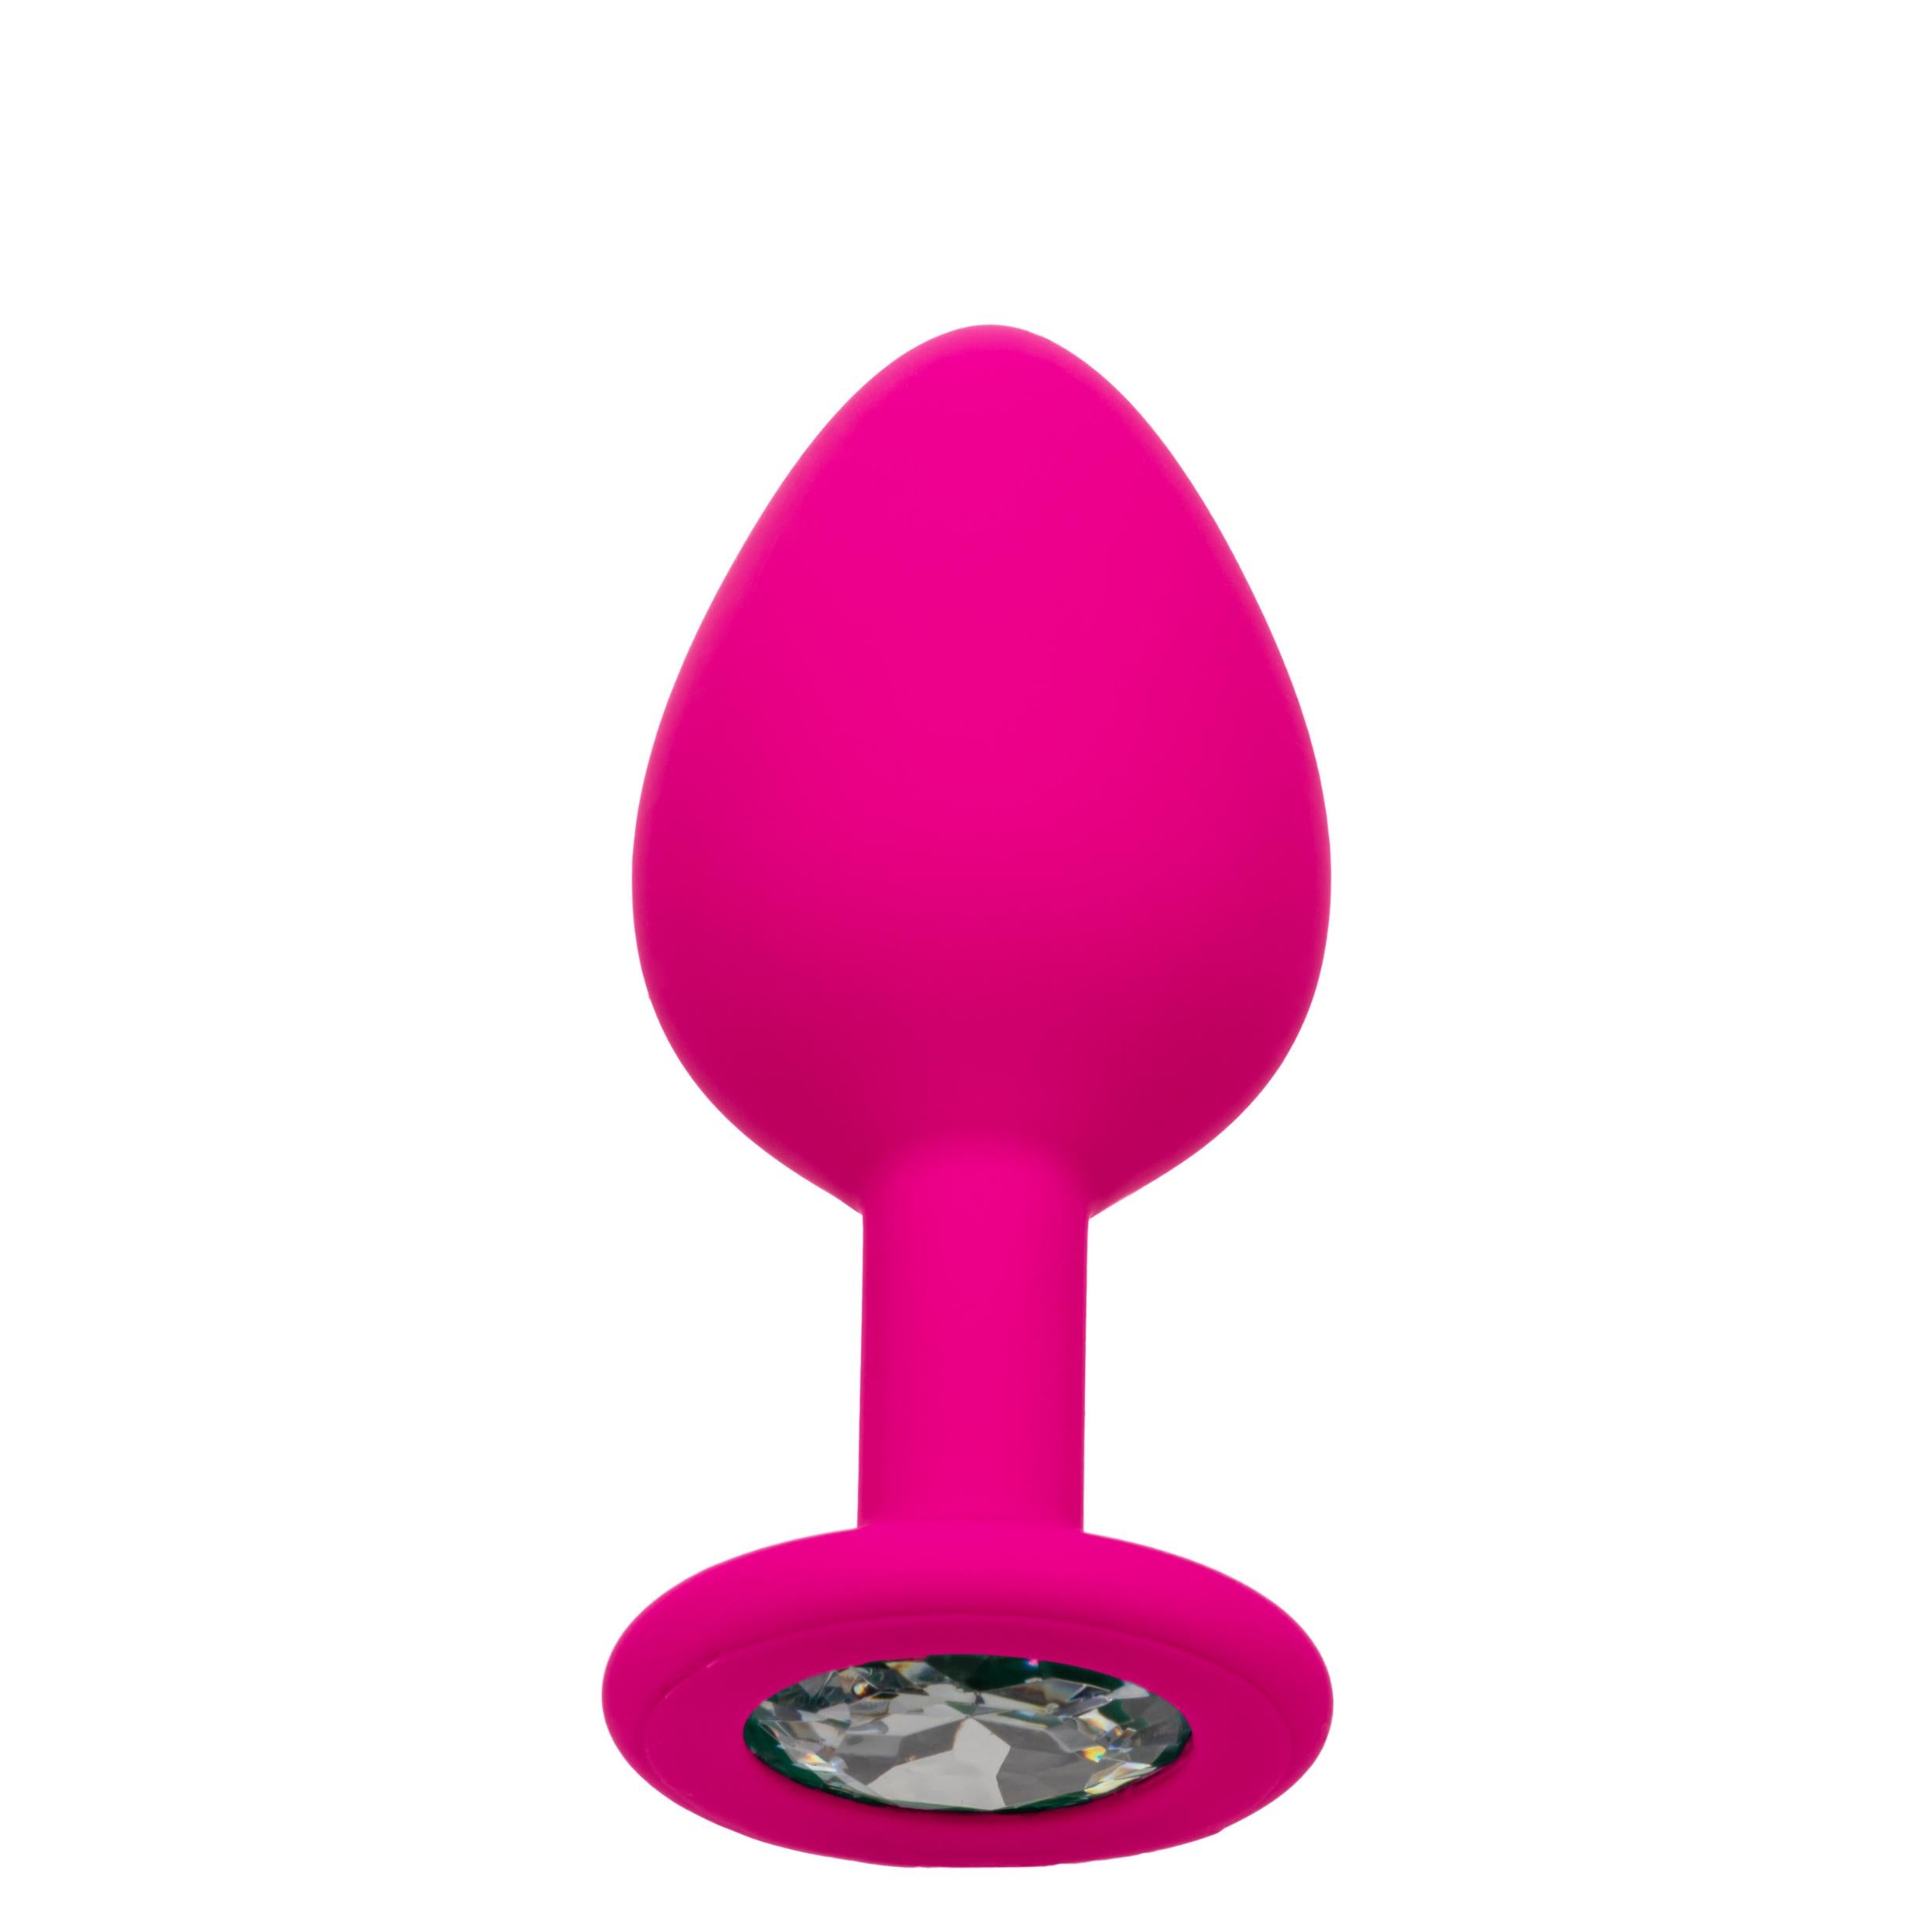 Cheeky Gems 3pc Set Pink